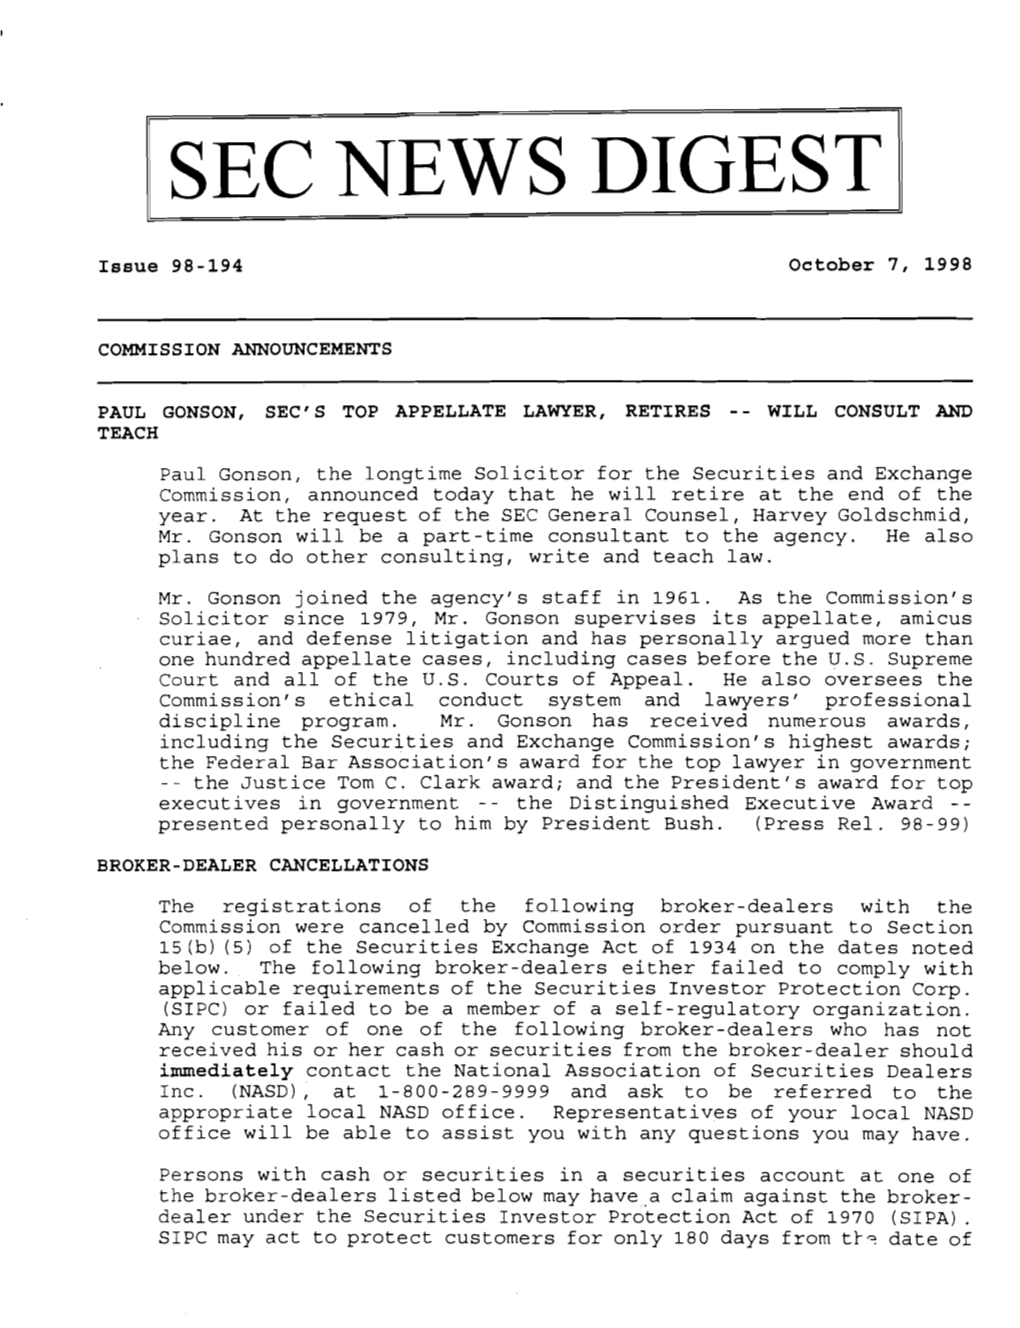 SEC News Digest, 10-7-1998